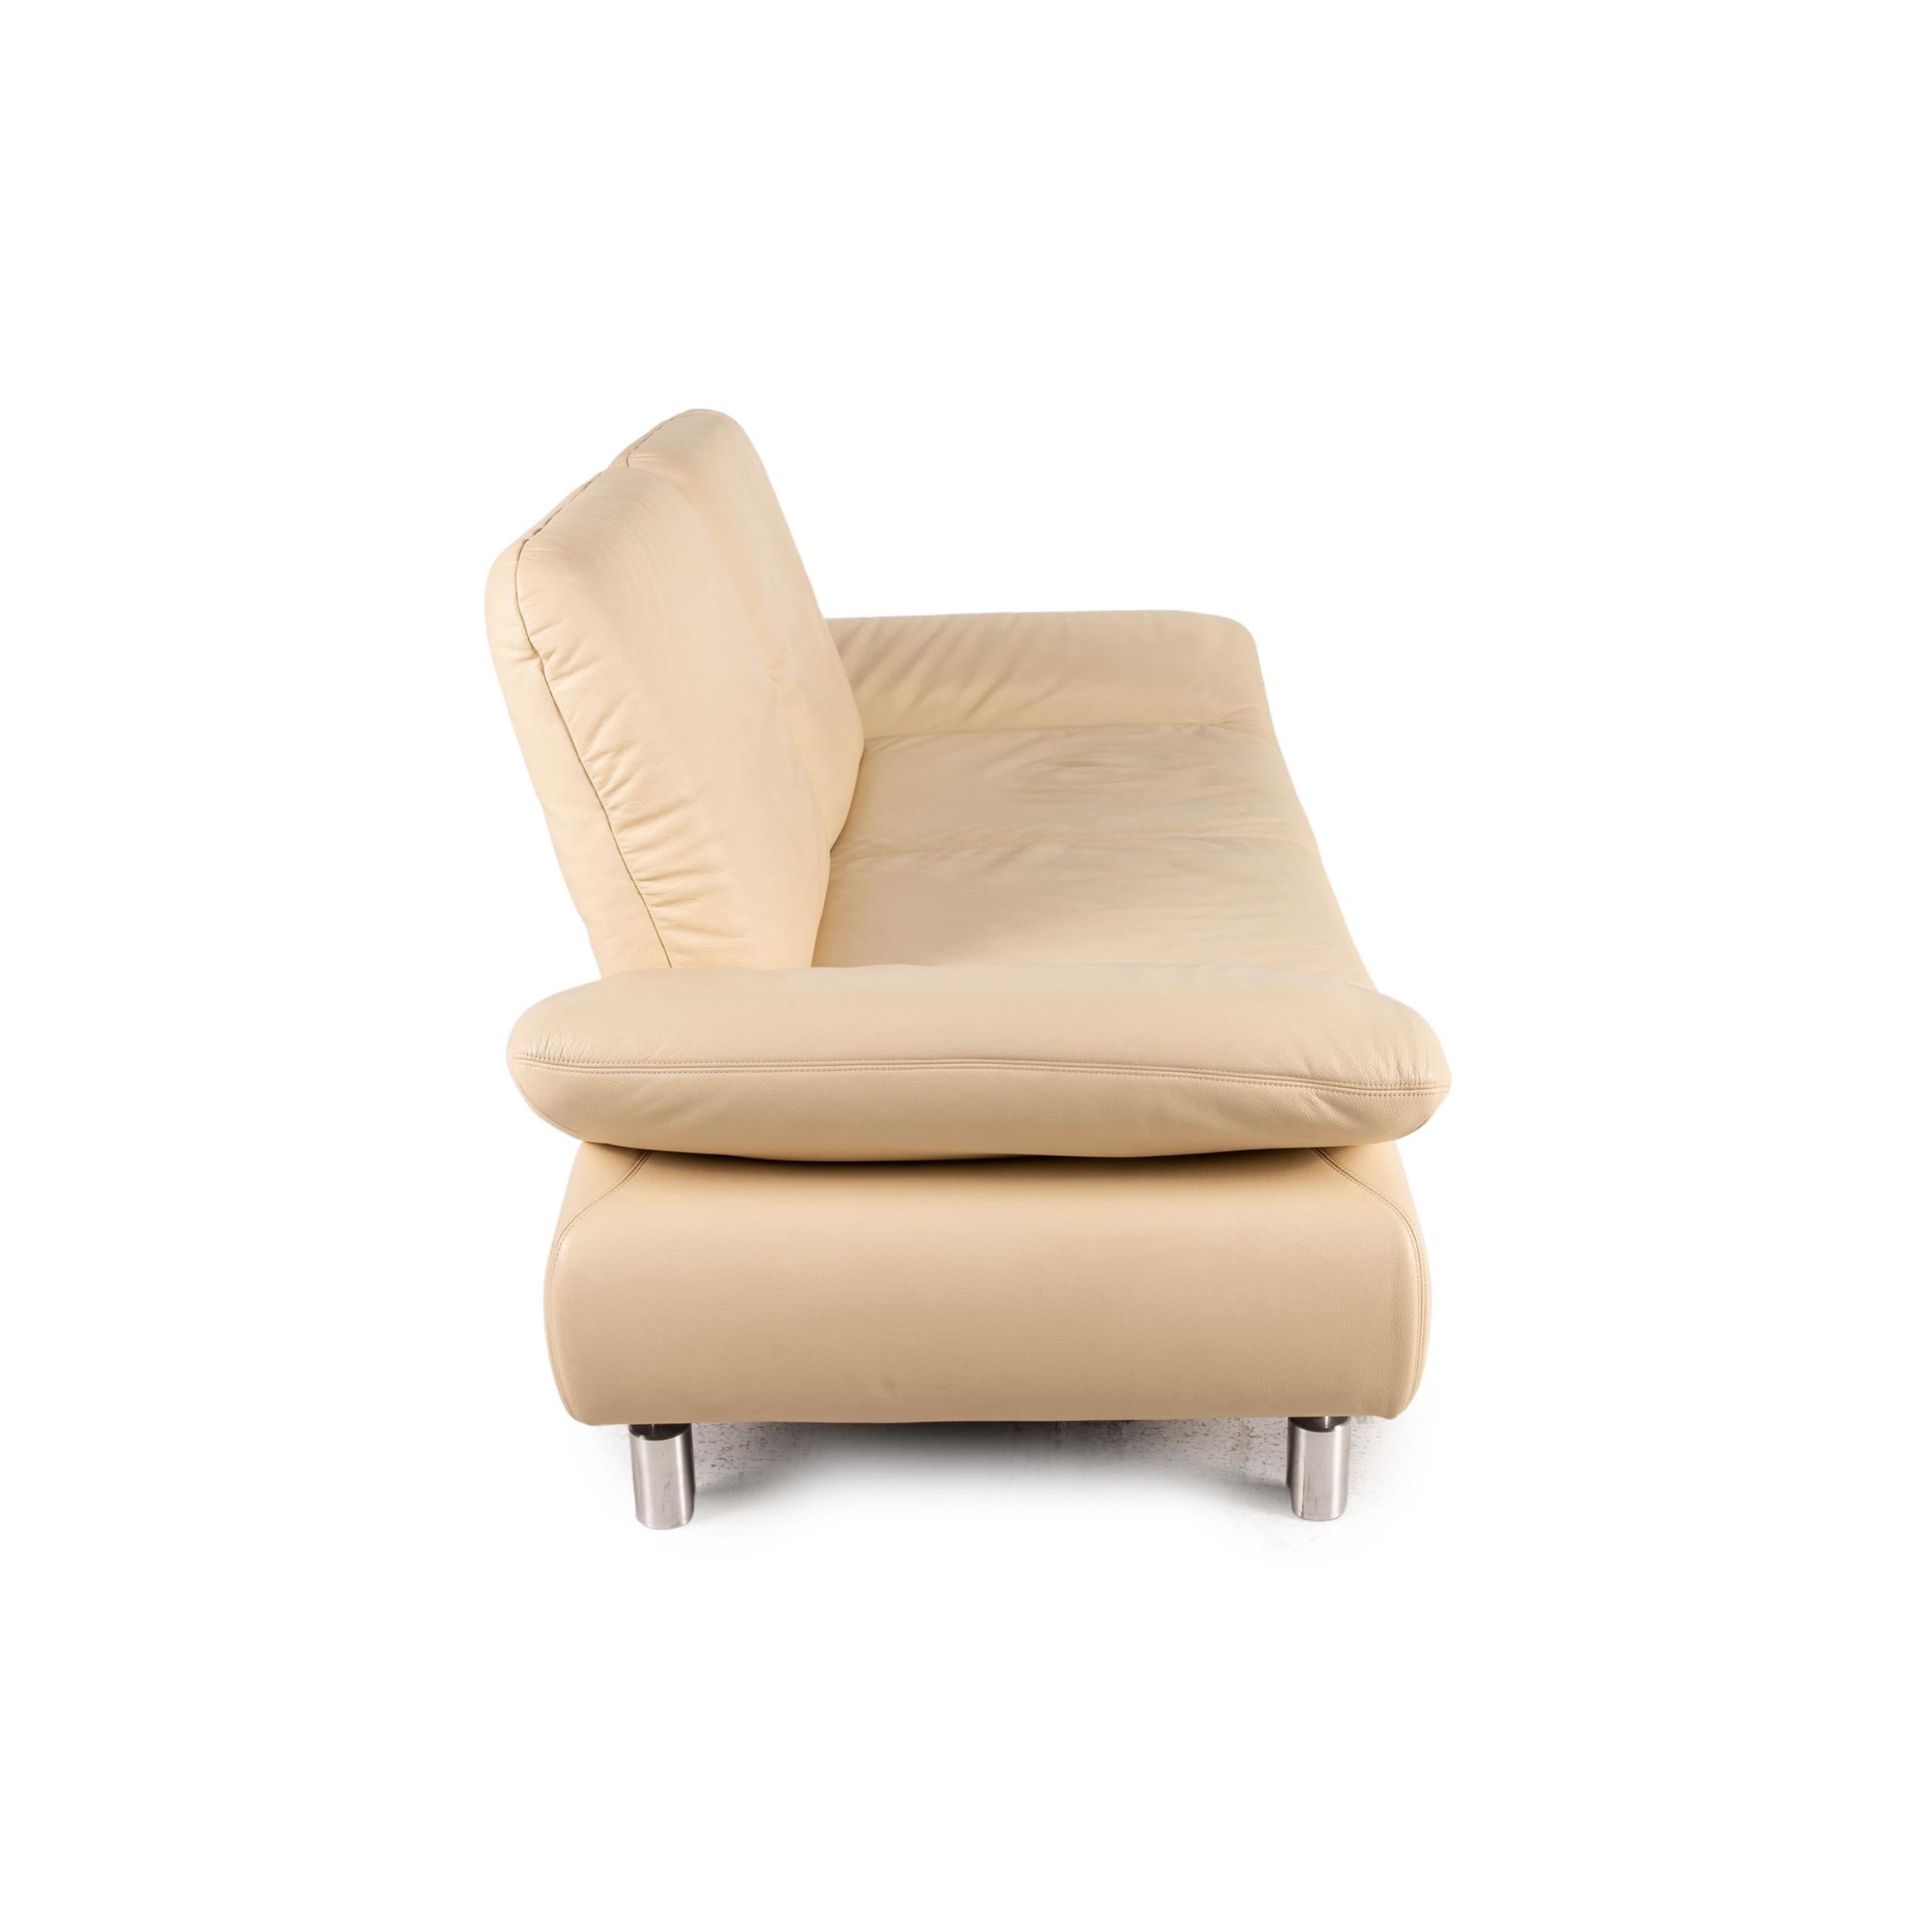 Koinor Rivoli leather sofa set cream 1x two-seater 1x stool function For Sale 7